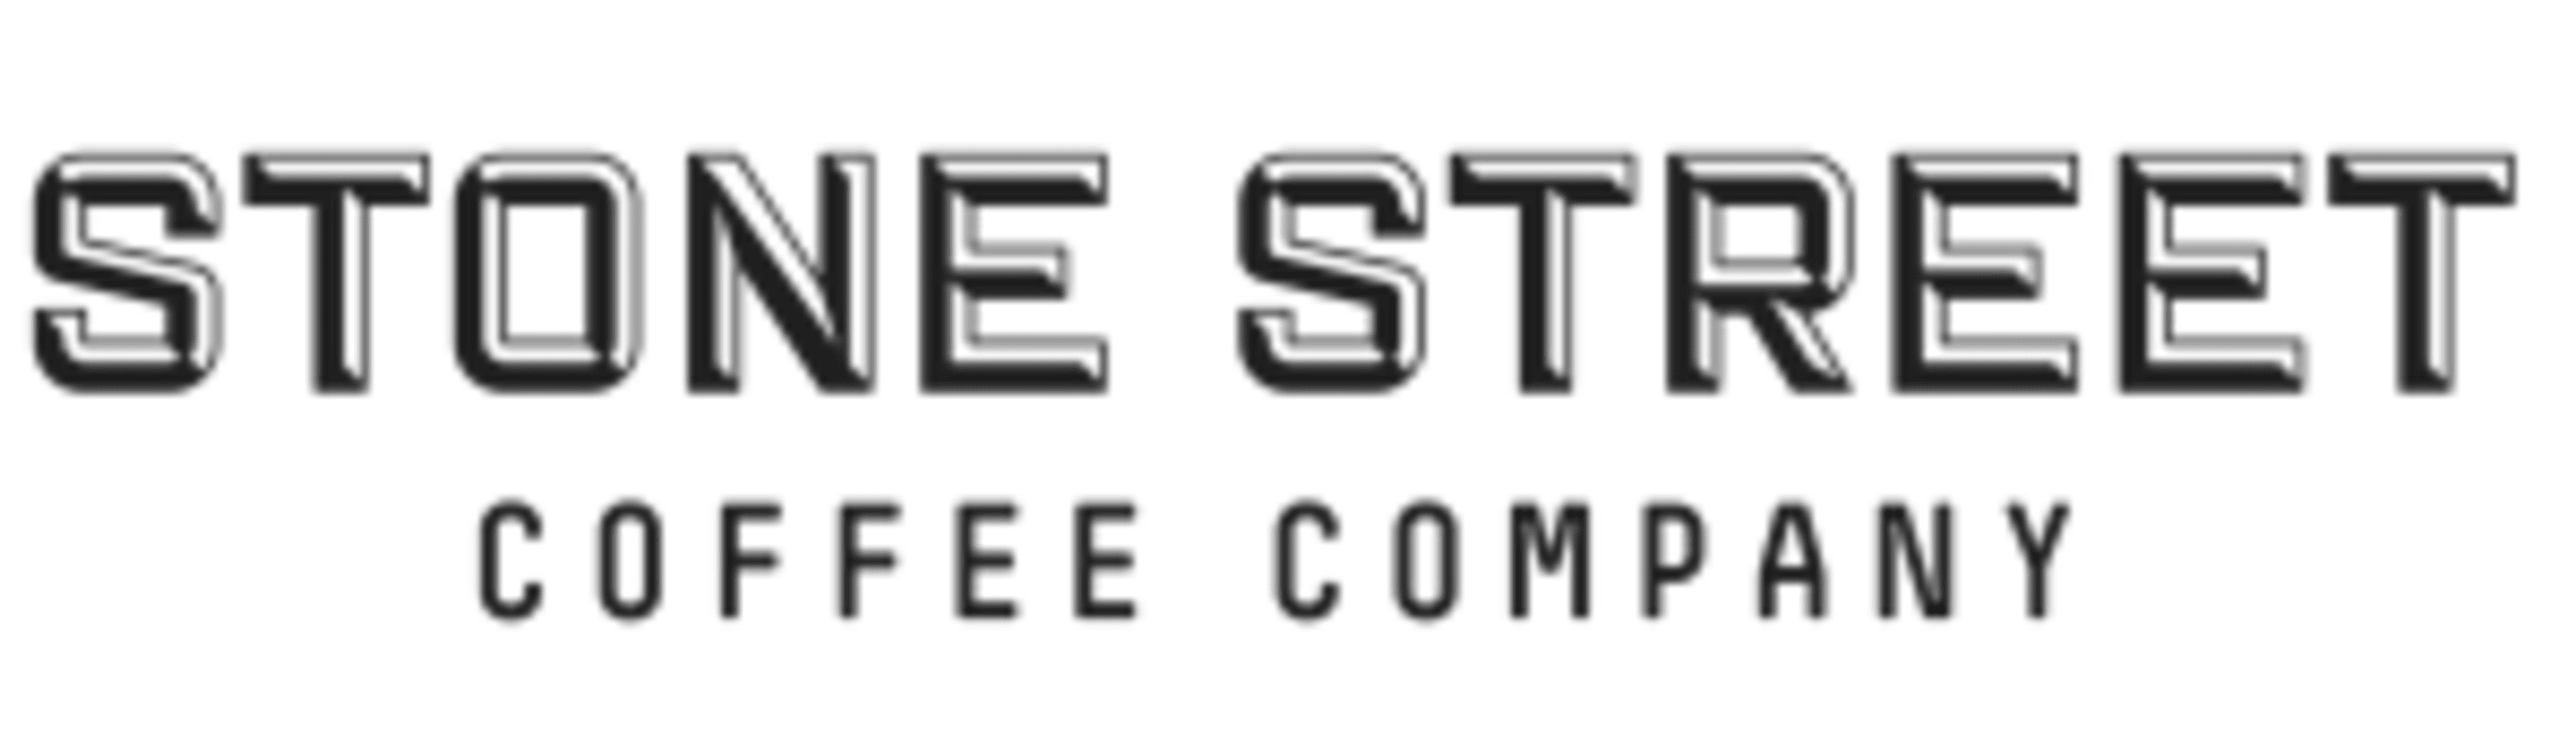 Stone Street CoffeeCode